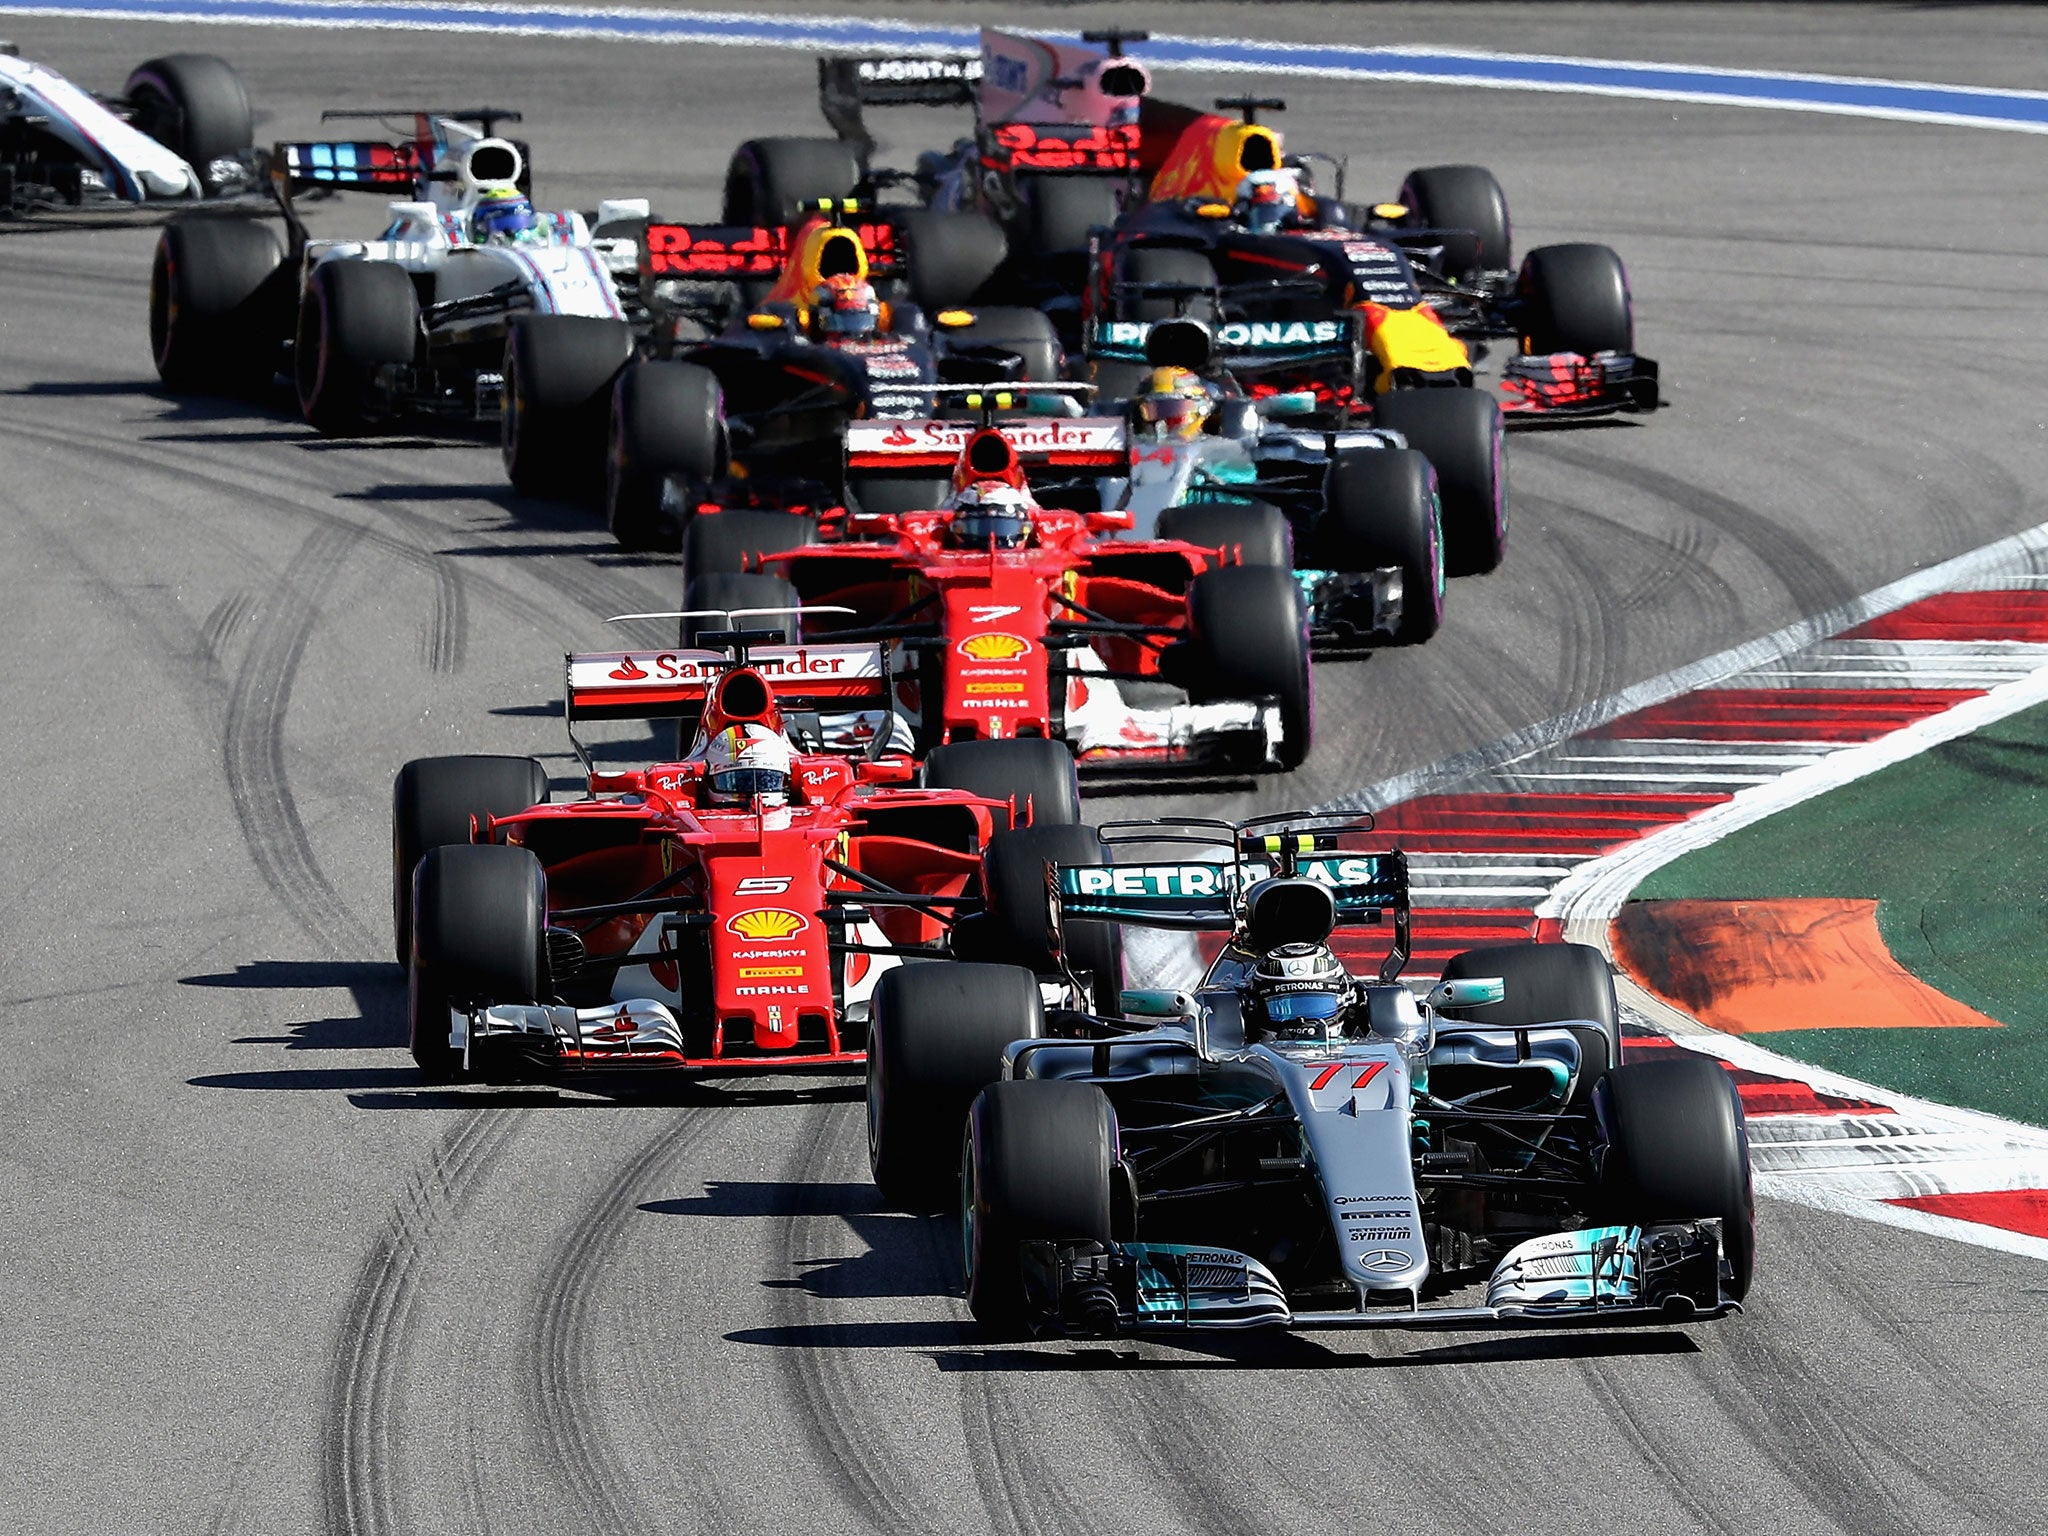 Valterri Bottas' pass on Sebastian Vettel was the first on-track overtake for the lead this season